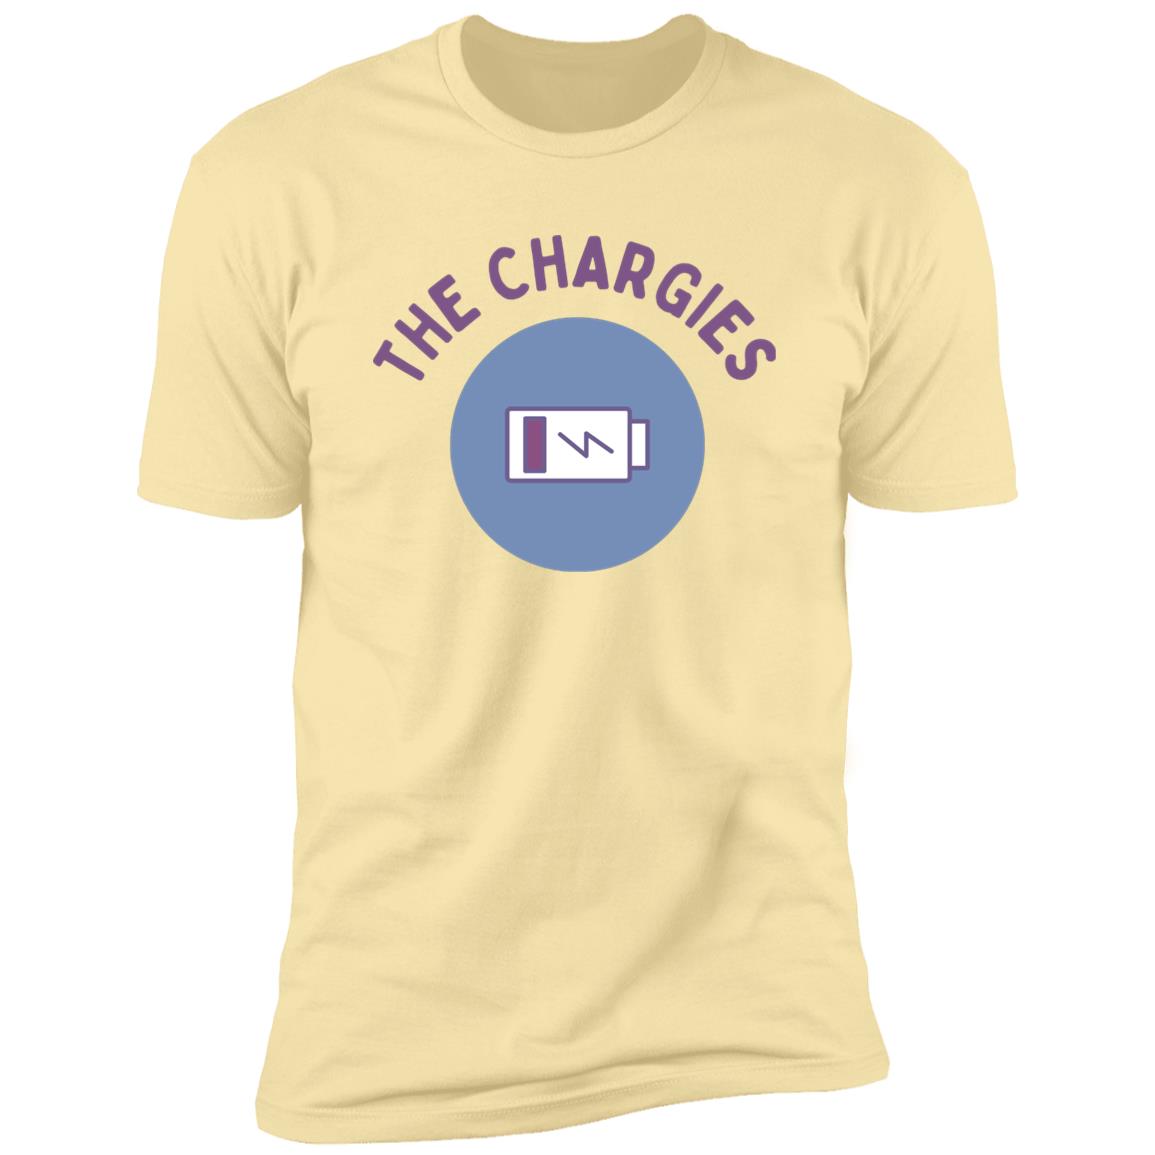 The Chargies T-Shirt